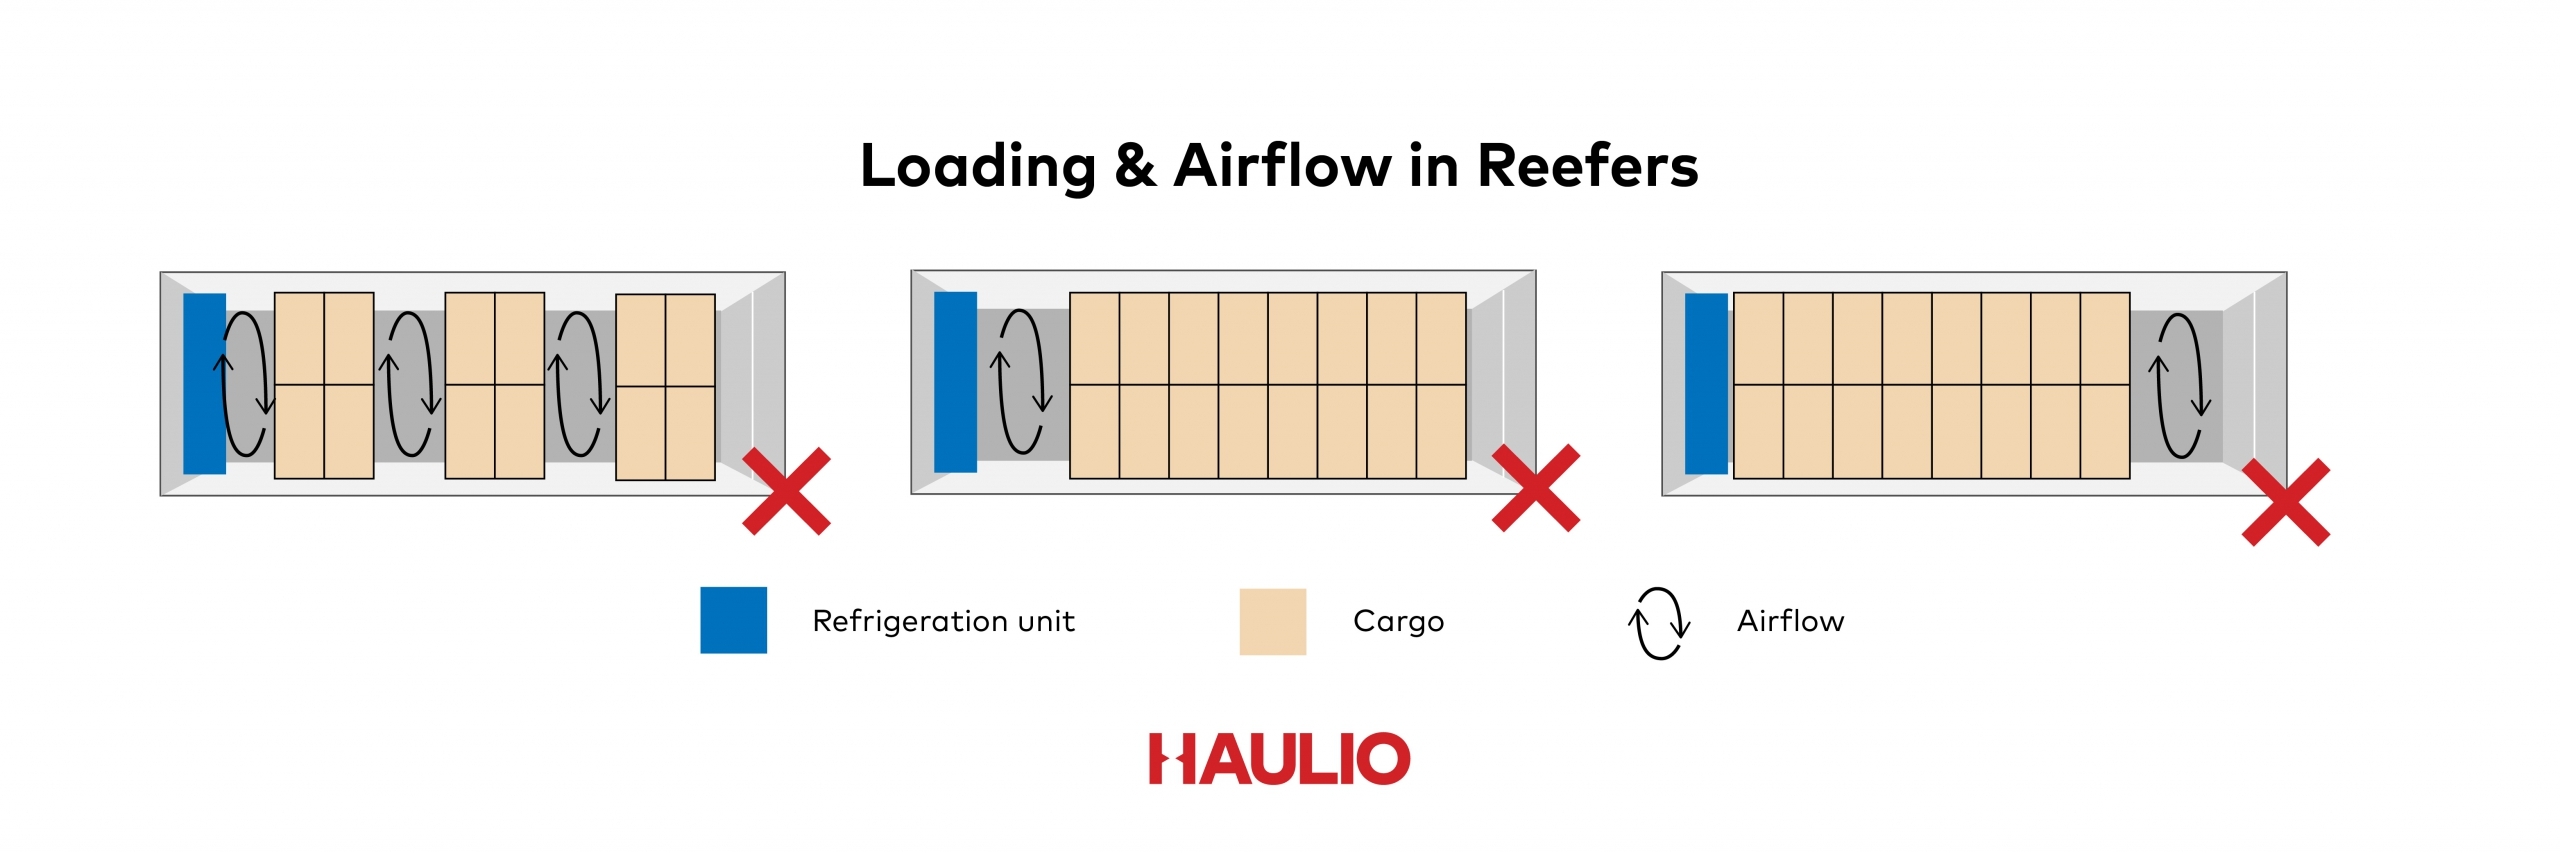 Reefer Loading & Airflow